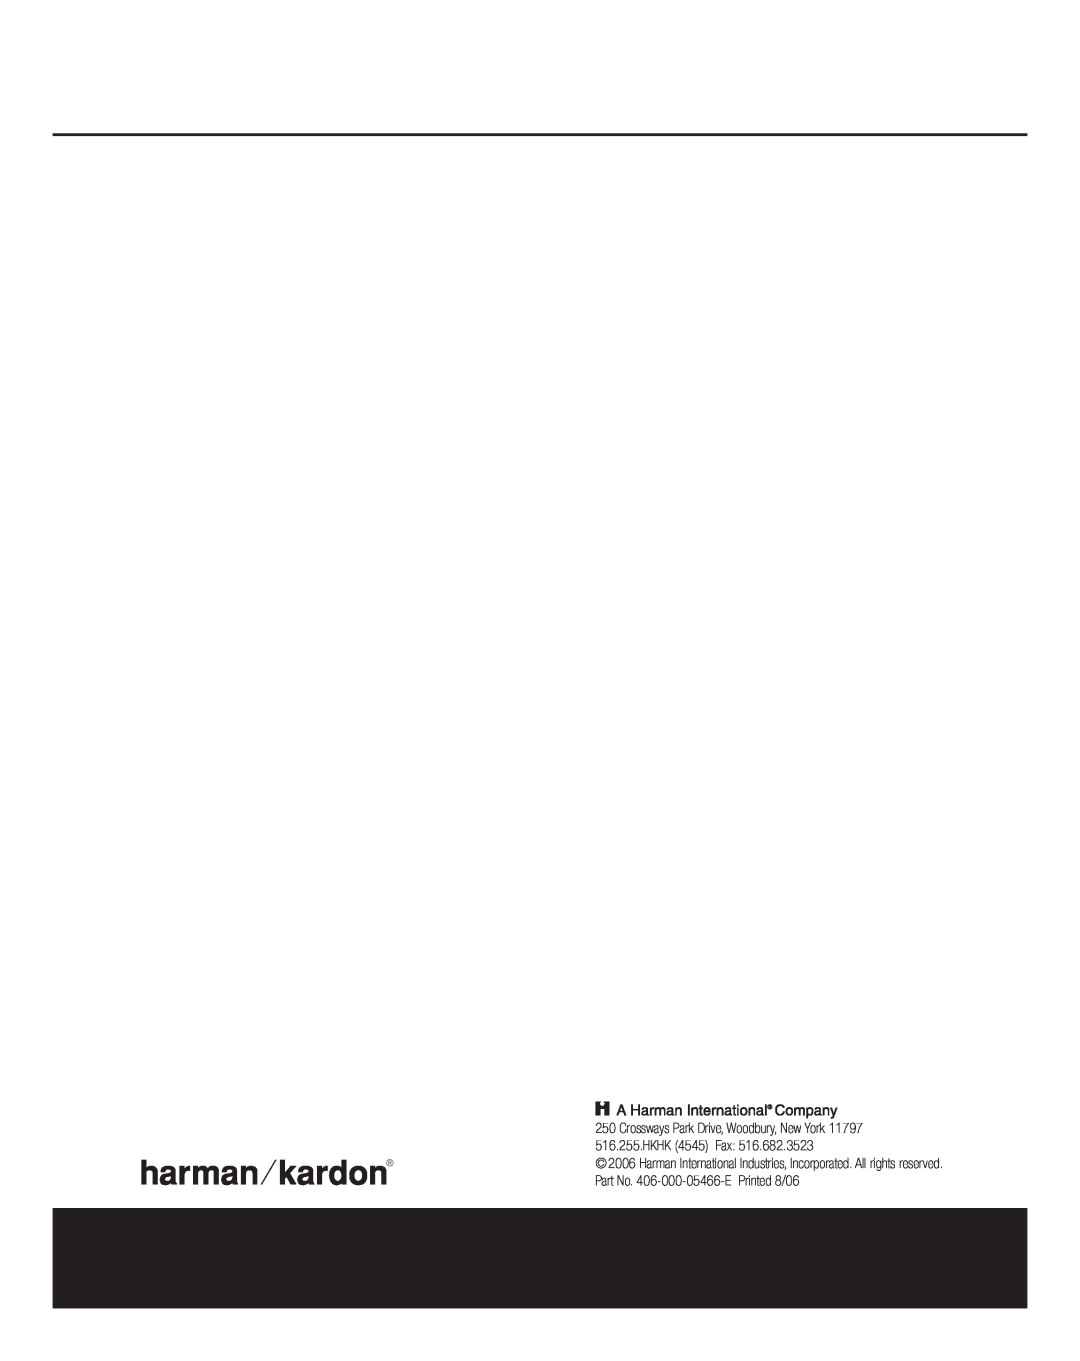 Harman-Kardon HKTS11 Crossways Park Drive, Woodbury, New York, HKHK 4545 Fax, Part No. 406-000-05466-EPrinted 8/06 